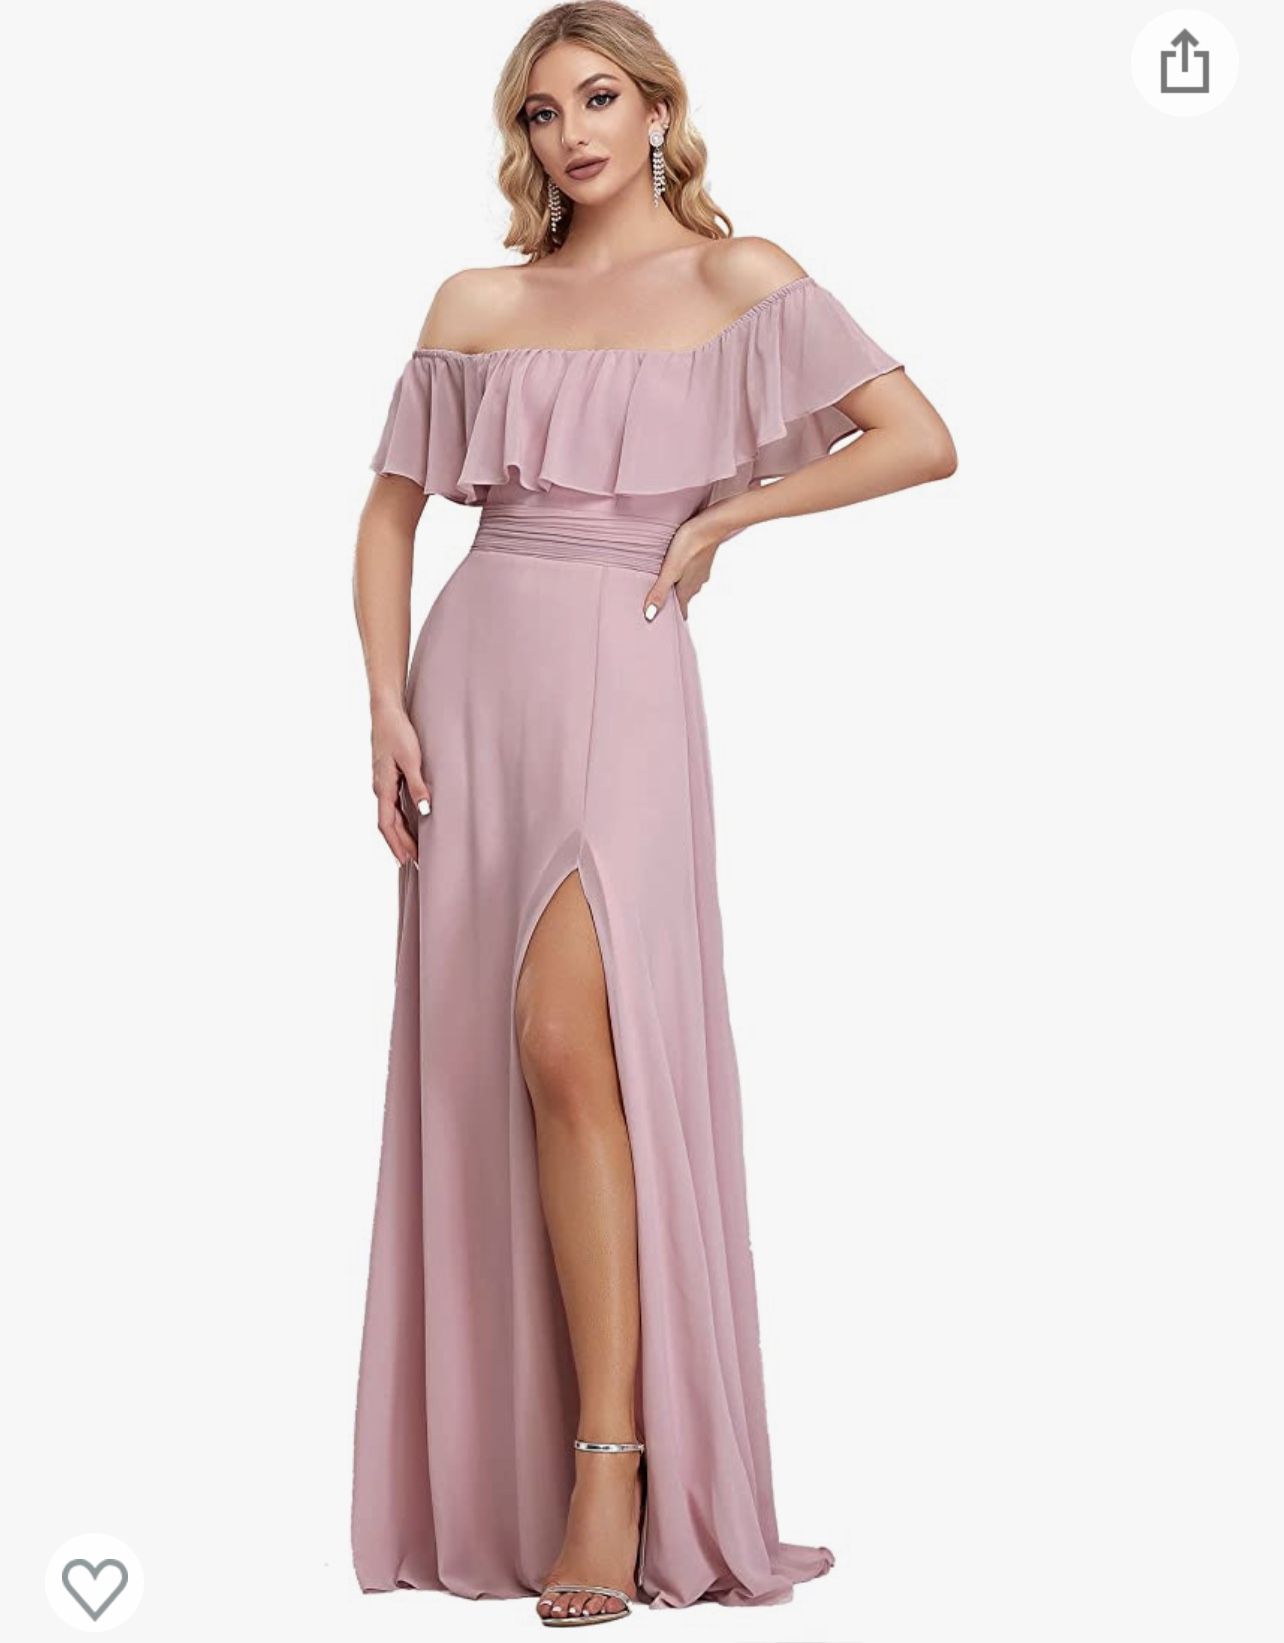 Off The Shoulder, Pink Ruffled Dress